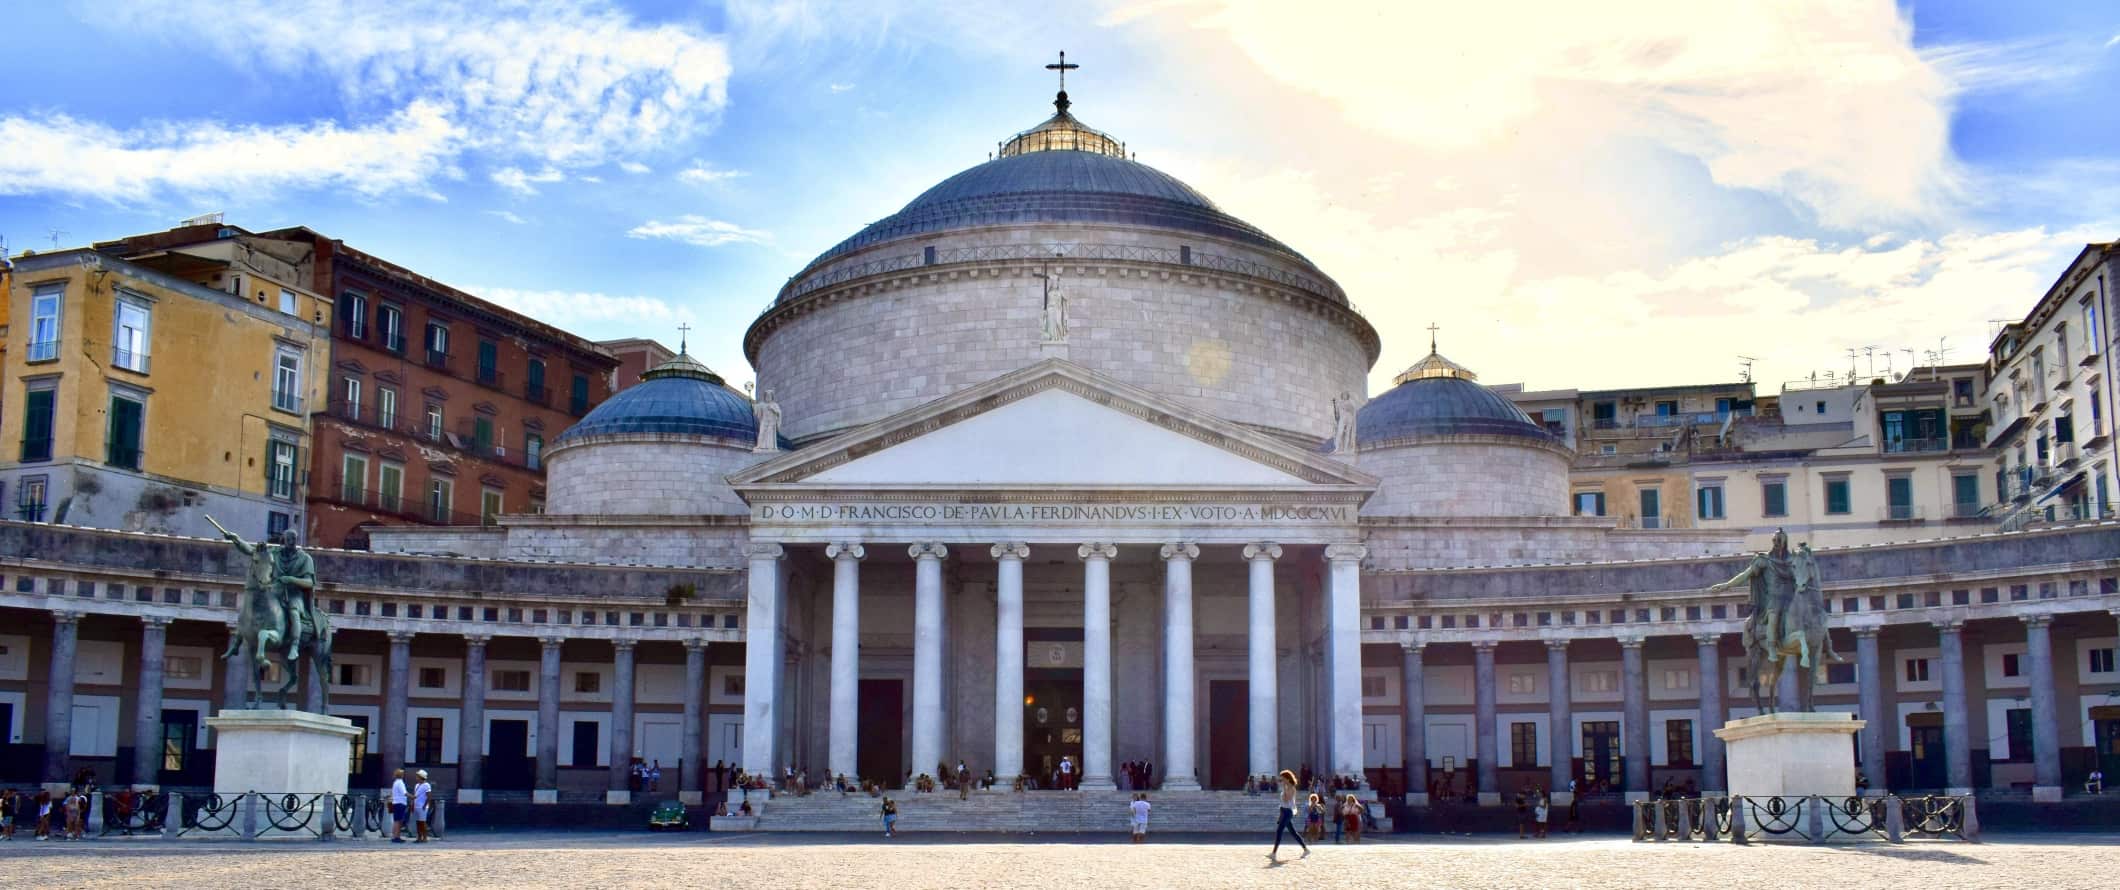 San Francesco di Paola basilica in the main square of Naples, Italy.